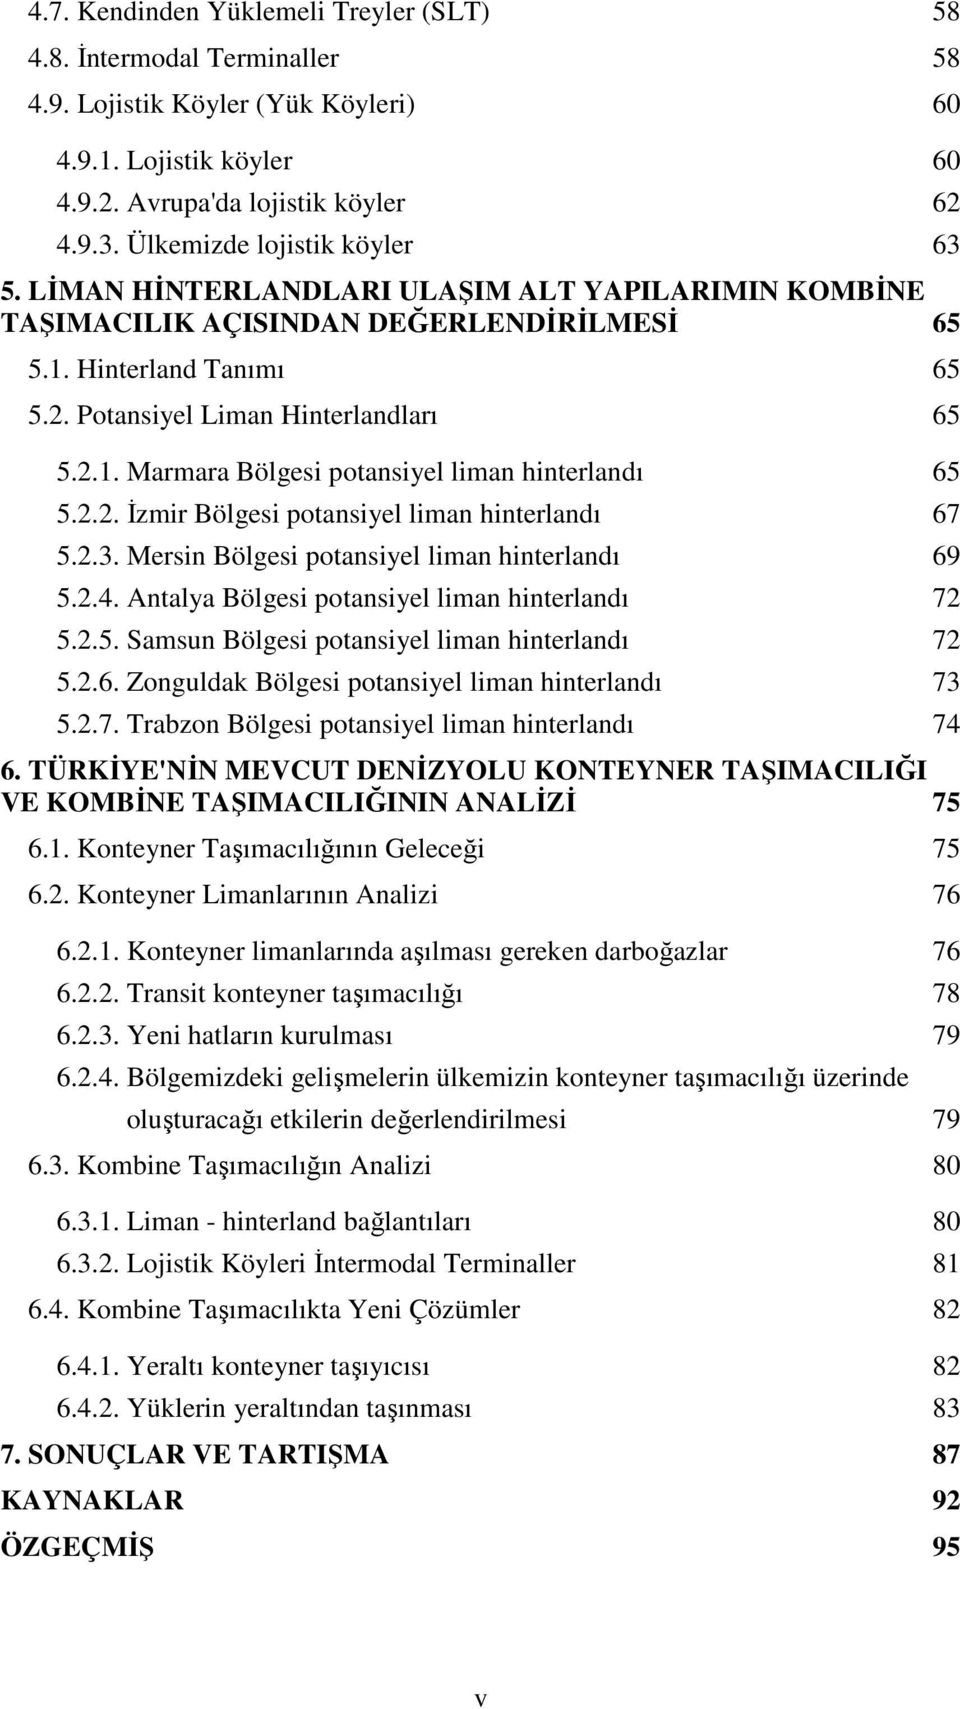 2.2. İzmir Bölgesi potansiyel liman hinterlandı 67 5.2.3. Mersin Bölgesi potansiyel liman hinterlandı 69 5.2.4. Antalya Bölgesi potansiyel liman hinterlandı 72 5.2.5. Samsun Bölgesi potansiyel liman hinterlandı 72 5.